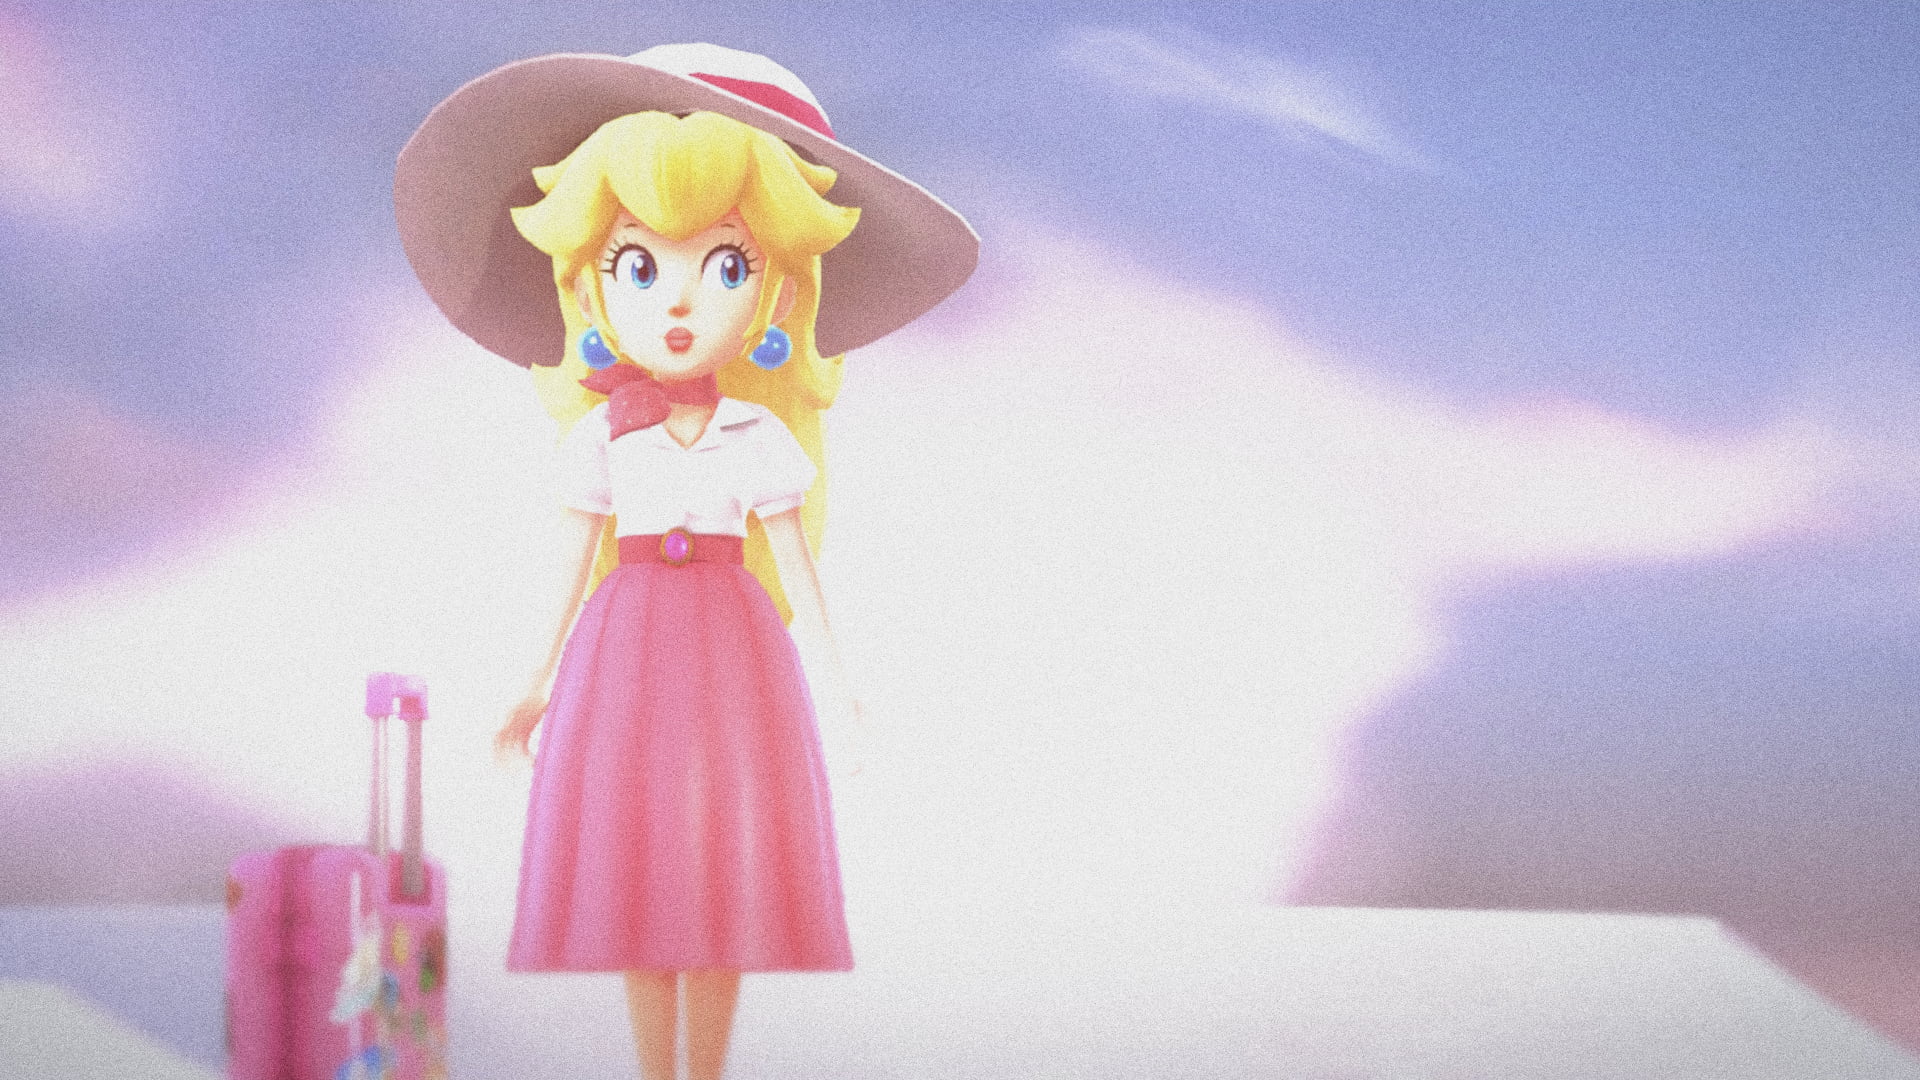 Super Mario Odyssey, Princess Peach, digital art